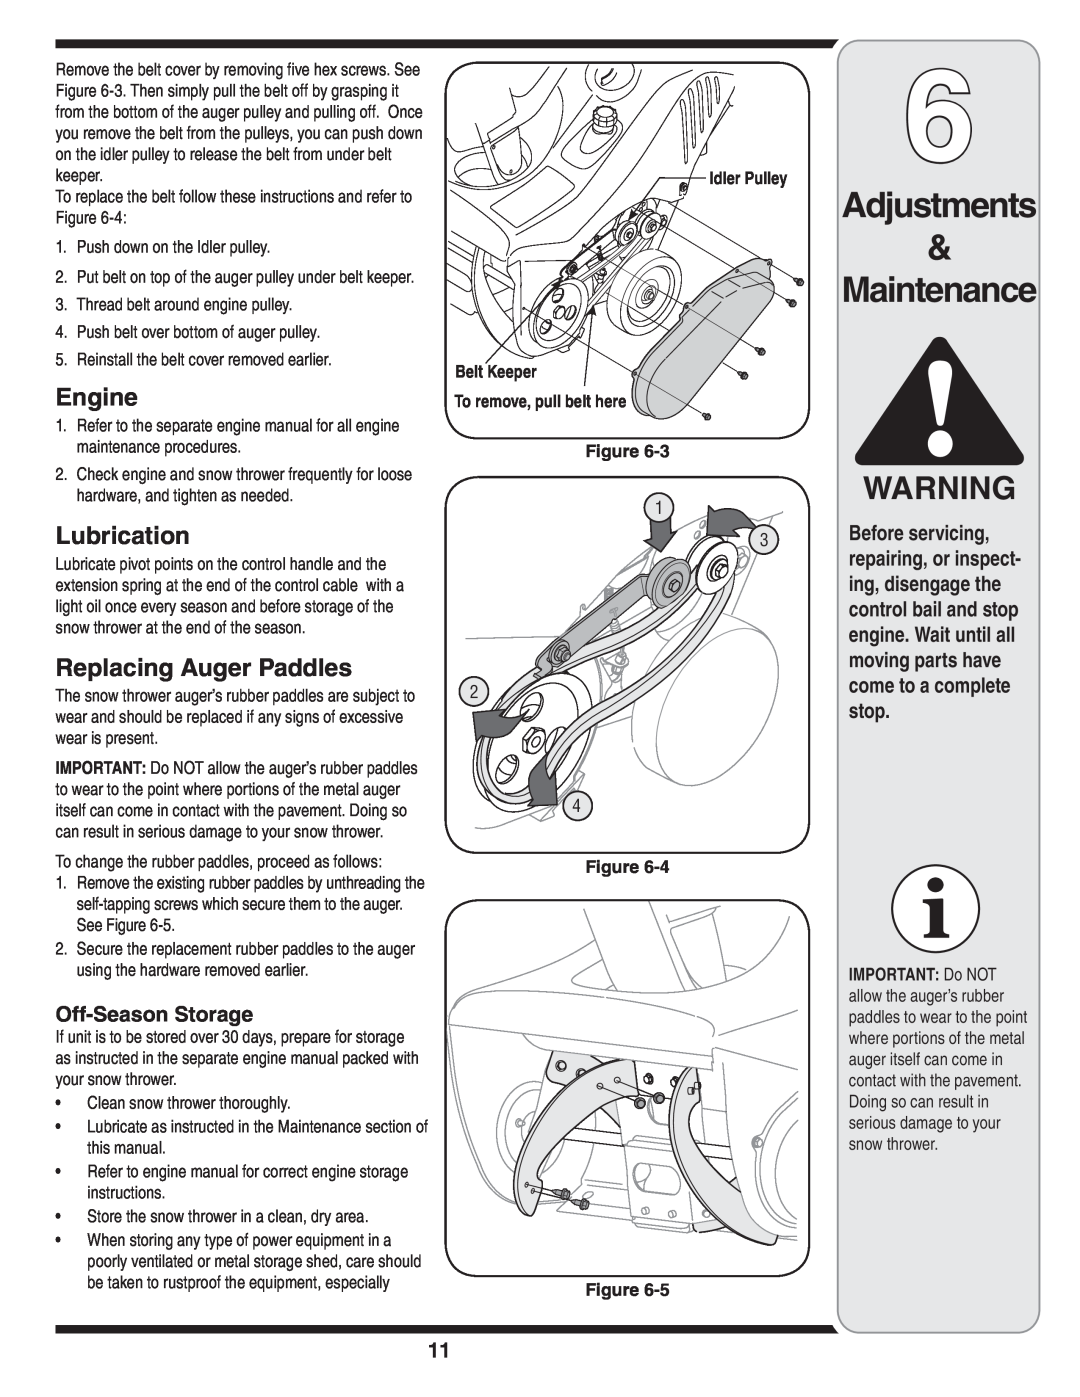 MTD 2N1 Engine, Lubrication, Replacing Auger Paddles, Adjustments & Maintenance, Idler Pulley Belt Keeper, Figure Figure 